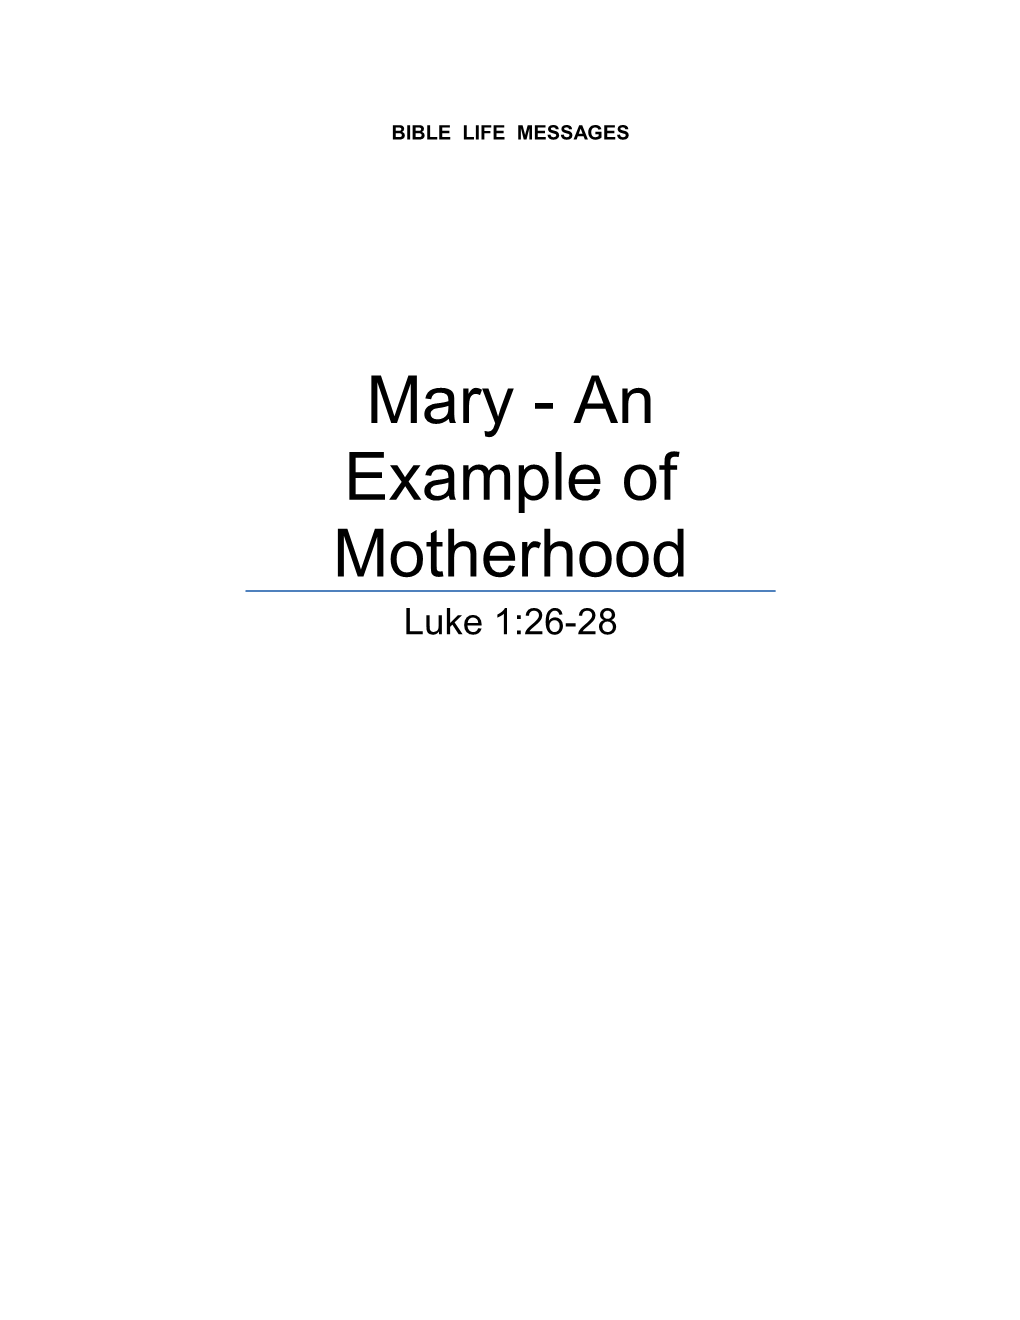 Mary - an Example of Motherhood